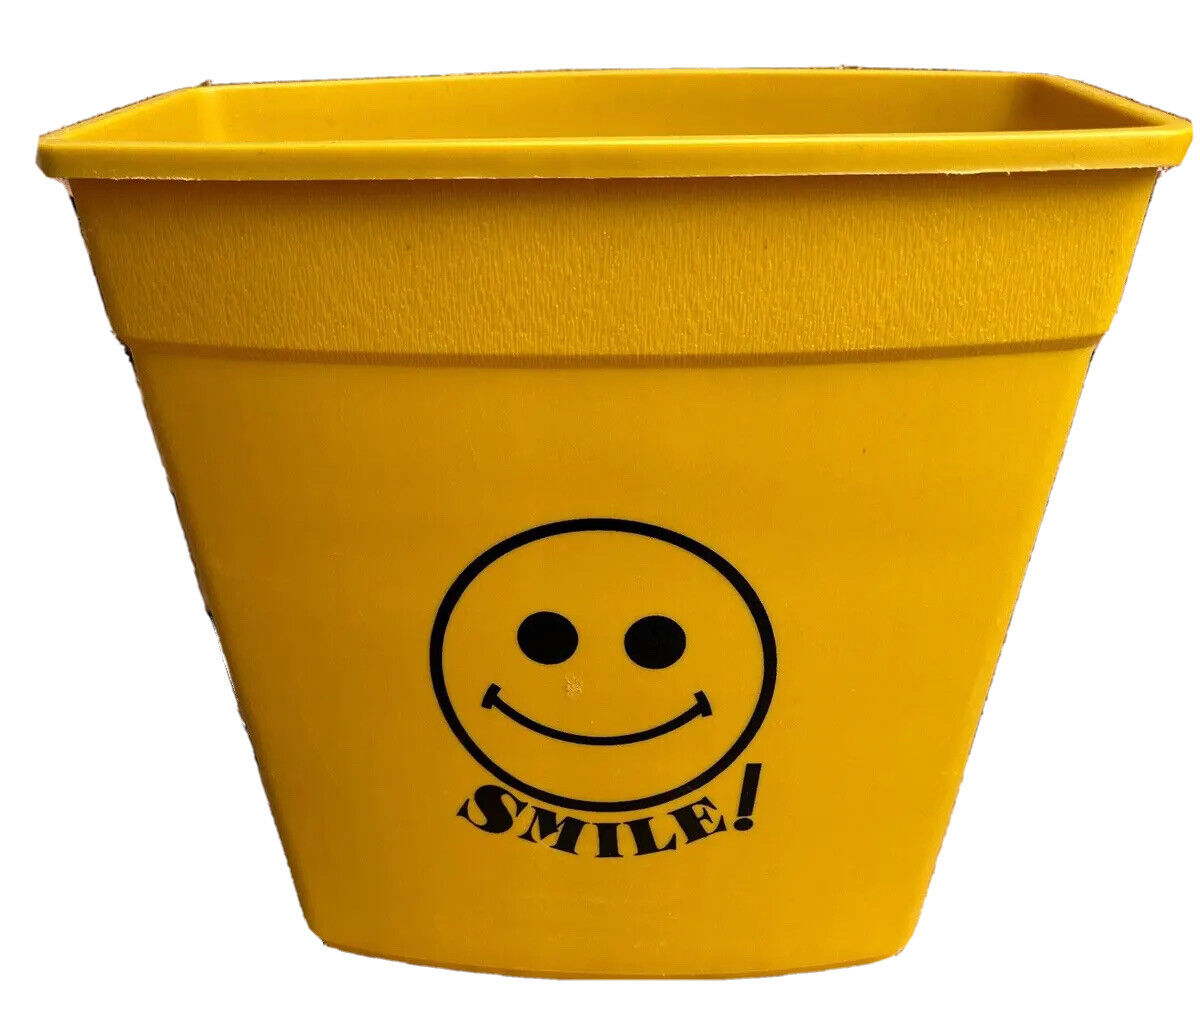 Smiley Face Trash Can Smile Golden Harvest Gold Yellow Vintage